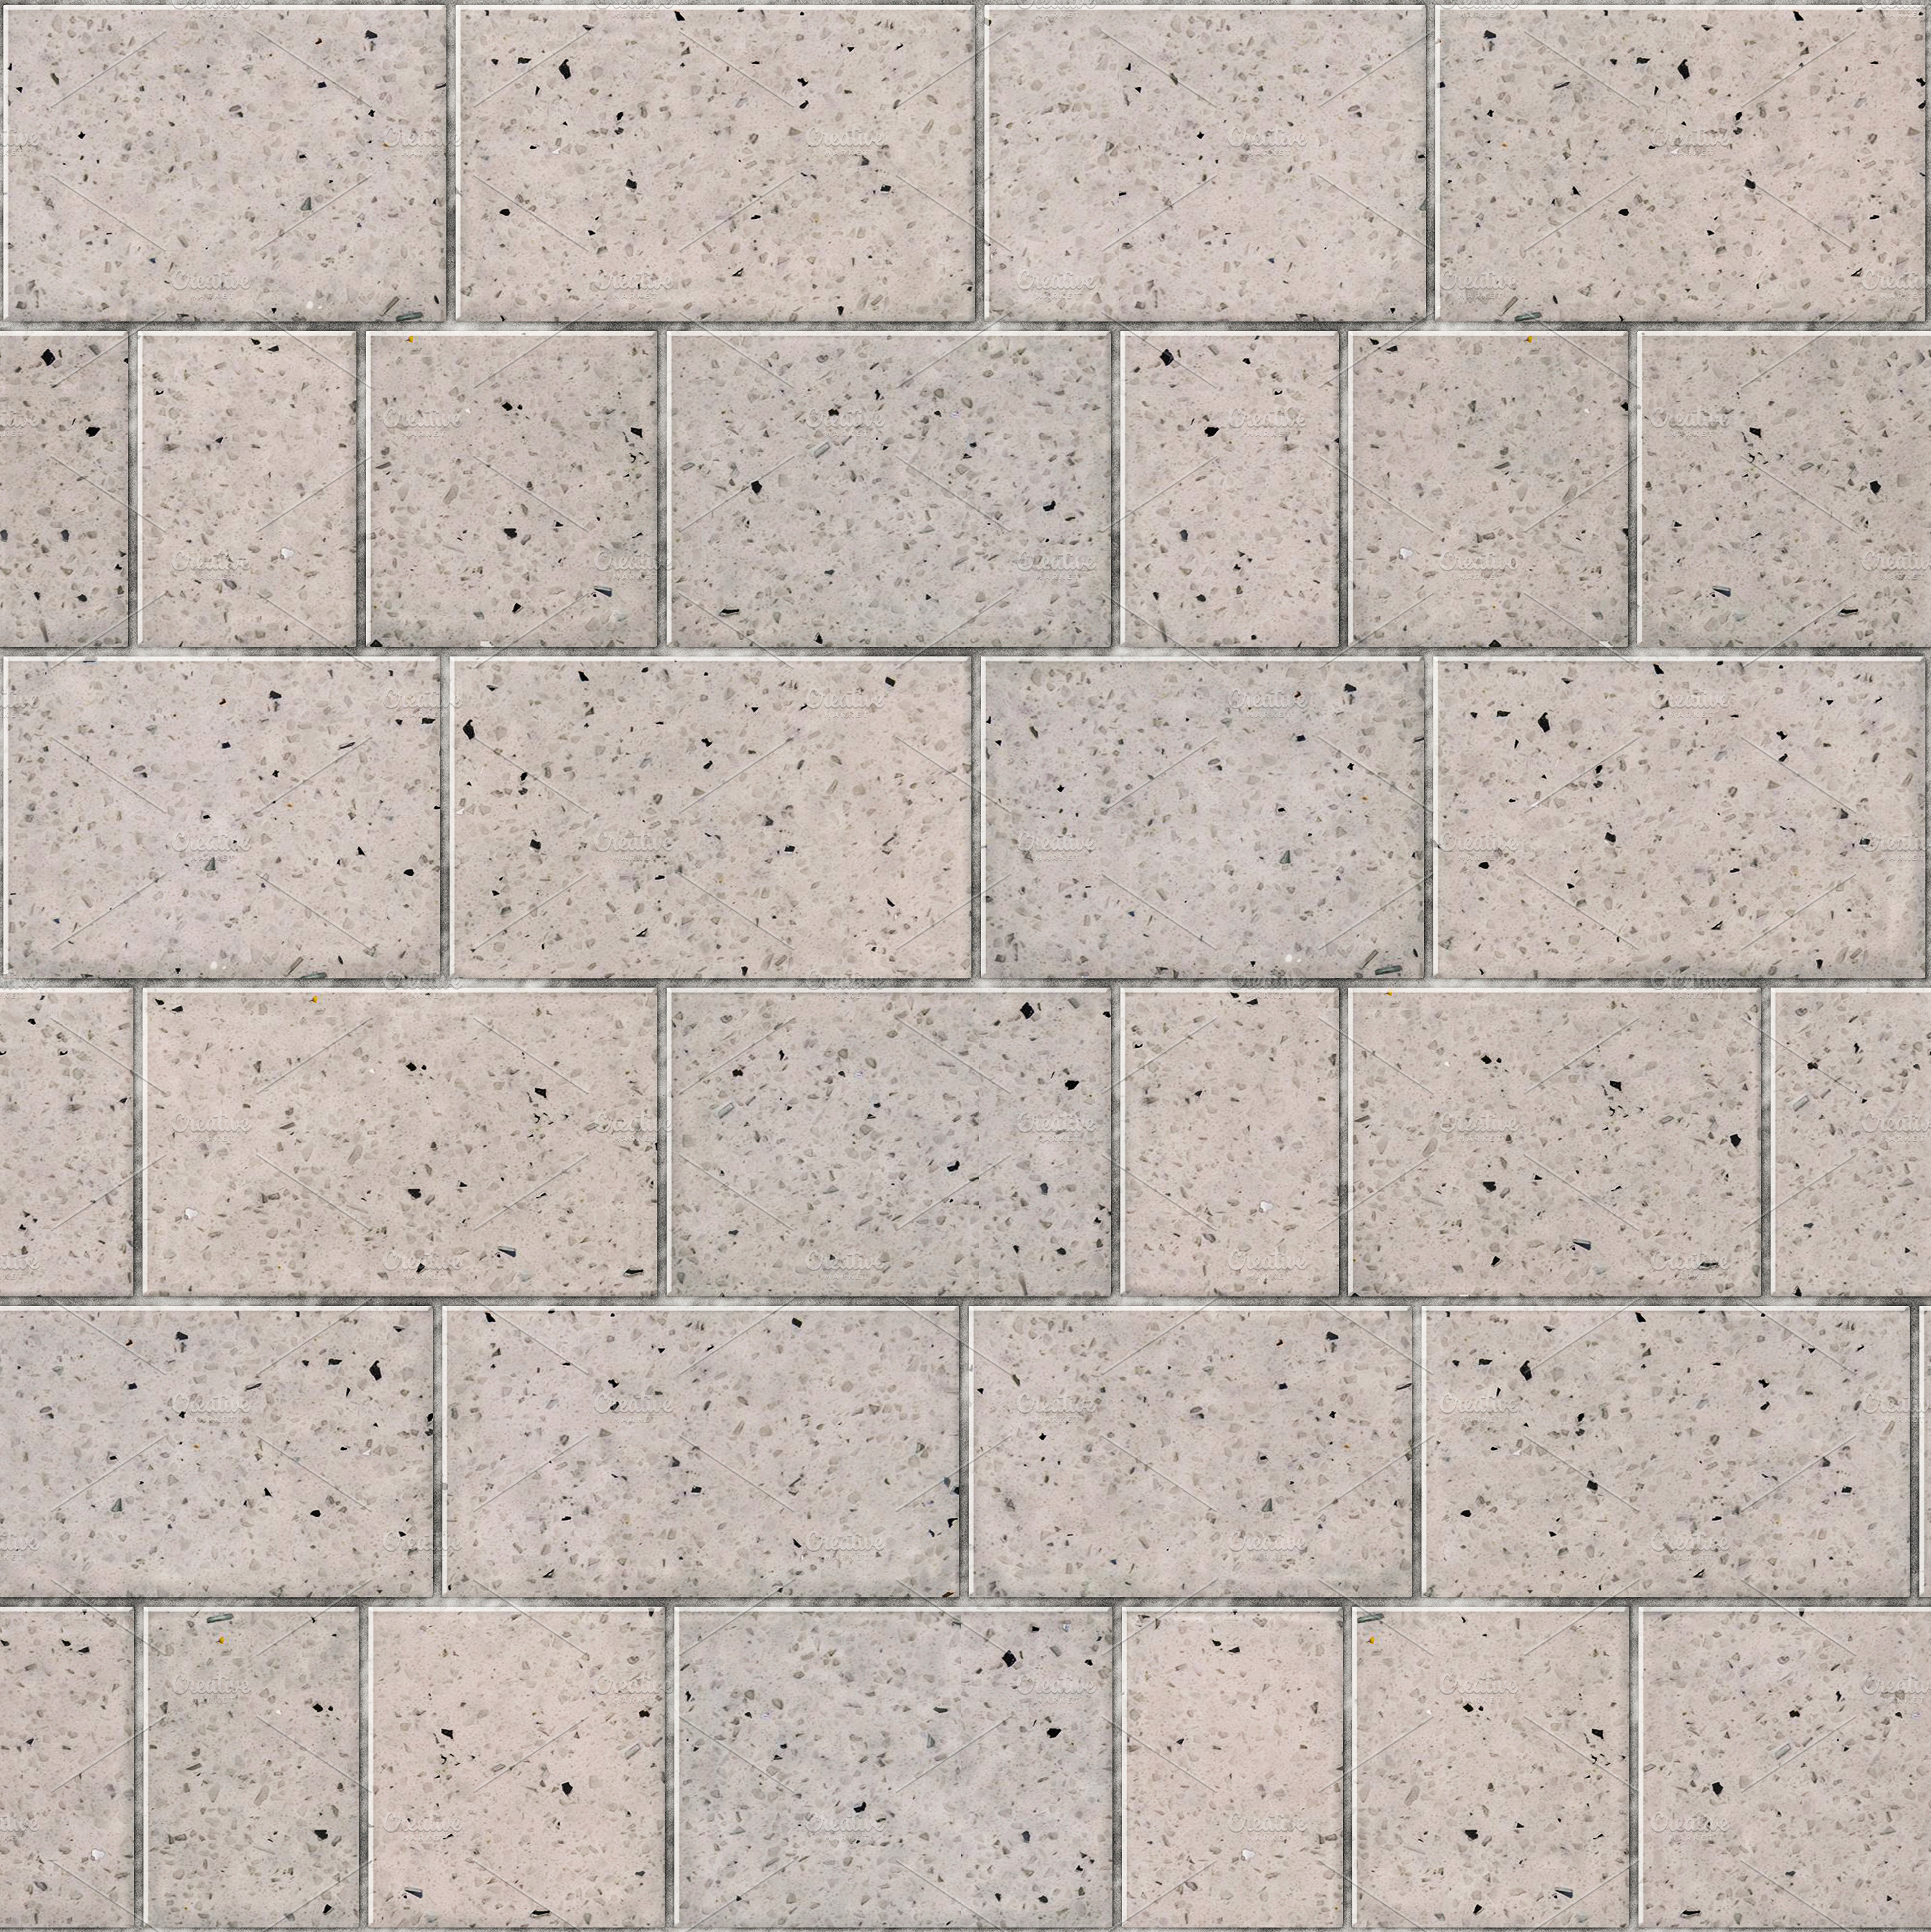 Granite tiles seamless texture ~ Textures ~ Creative Market